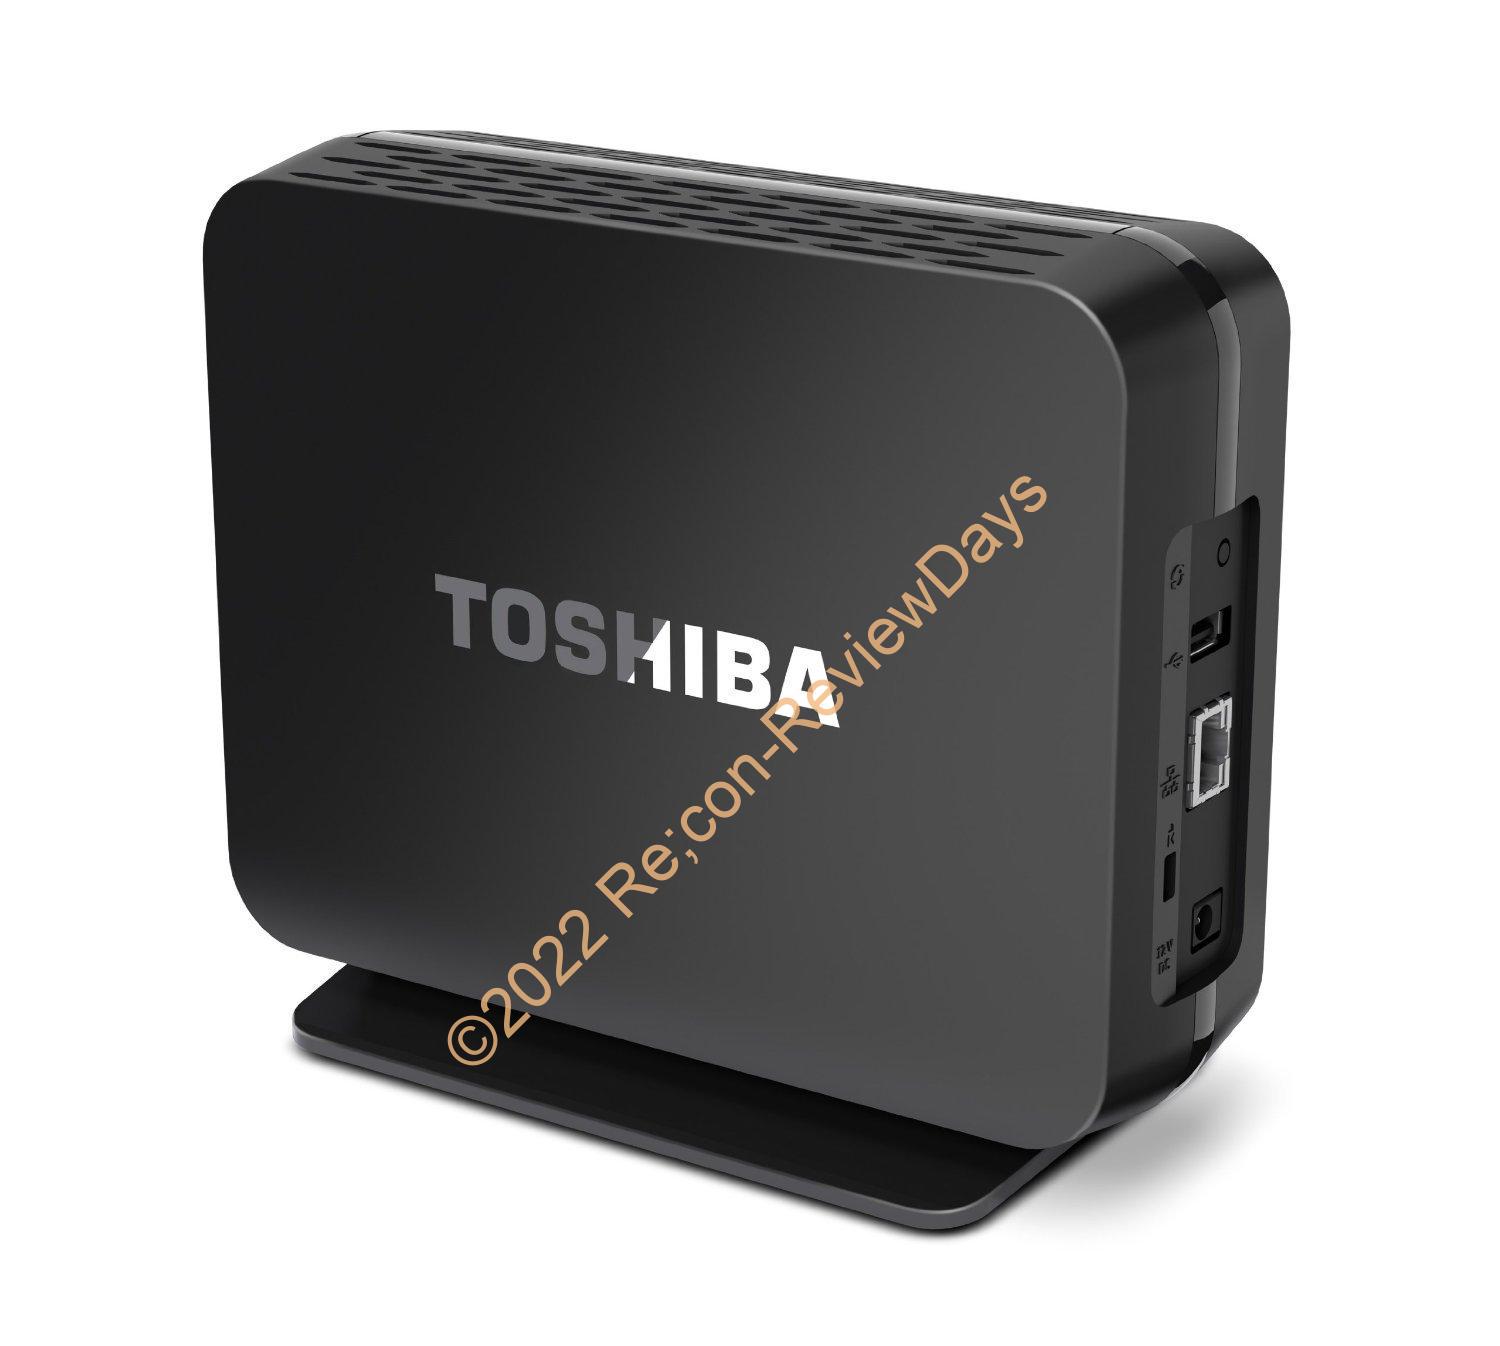 Amazonにて東芝純正のロゴ入りの3TBモデルのNAS「HDNB130XKEK1」がタイムセール特価9,520円、送料無料で販売中 #東芝 #TOSHIBA #NAS